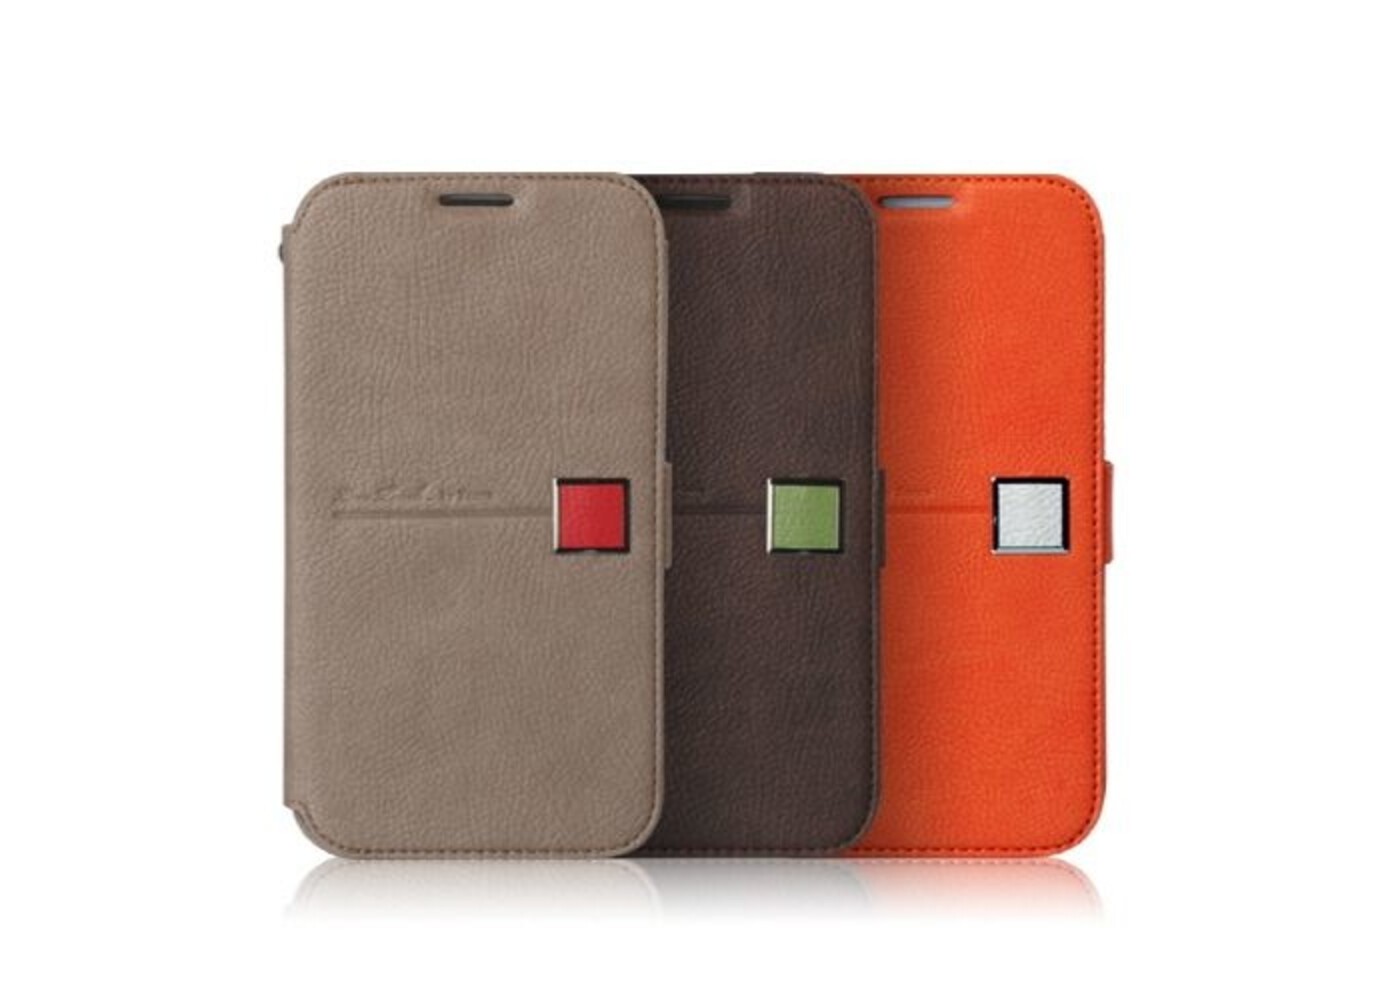 Zenus Galaxy Note 2 Masstige Color Point Diary Series - Orange